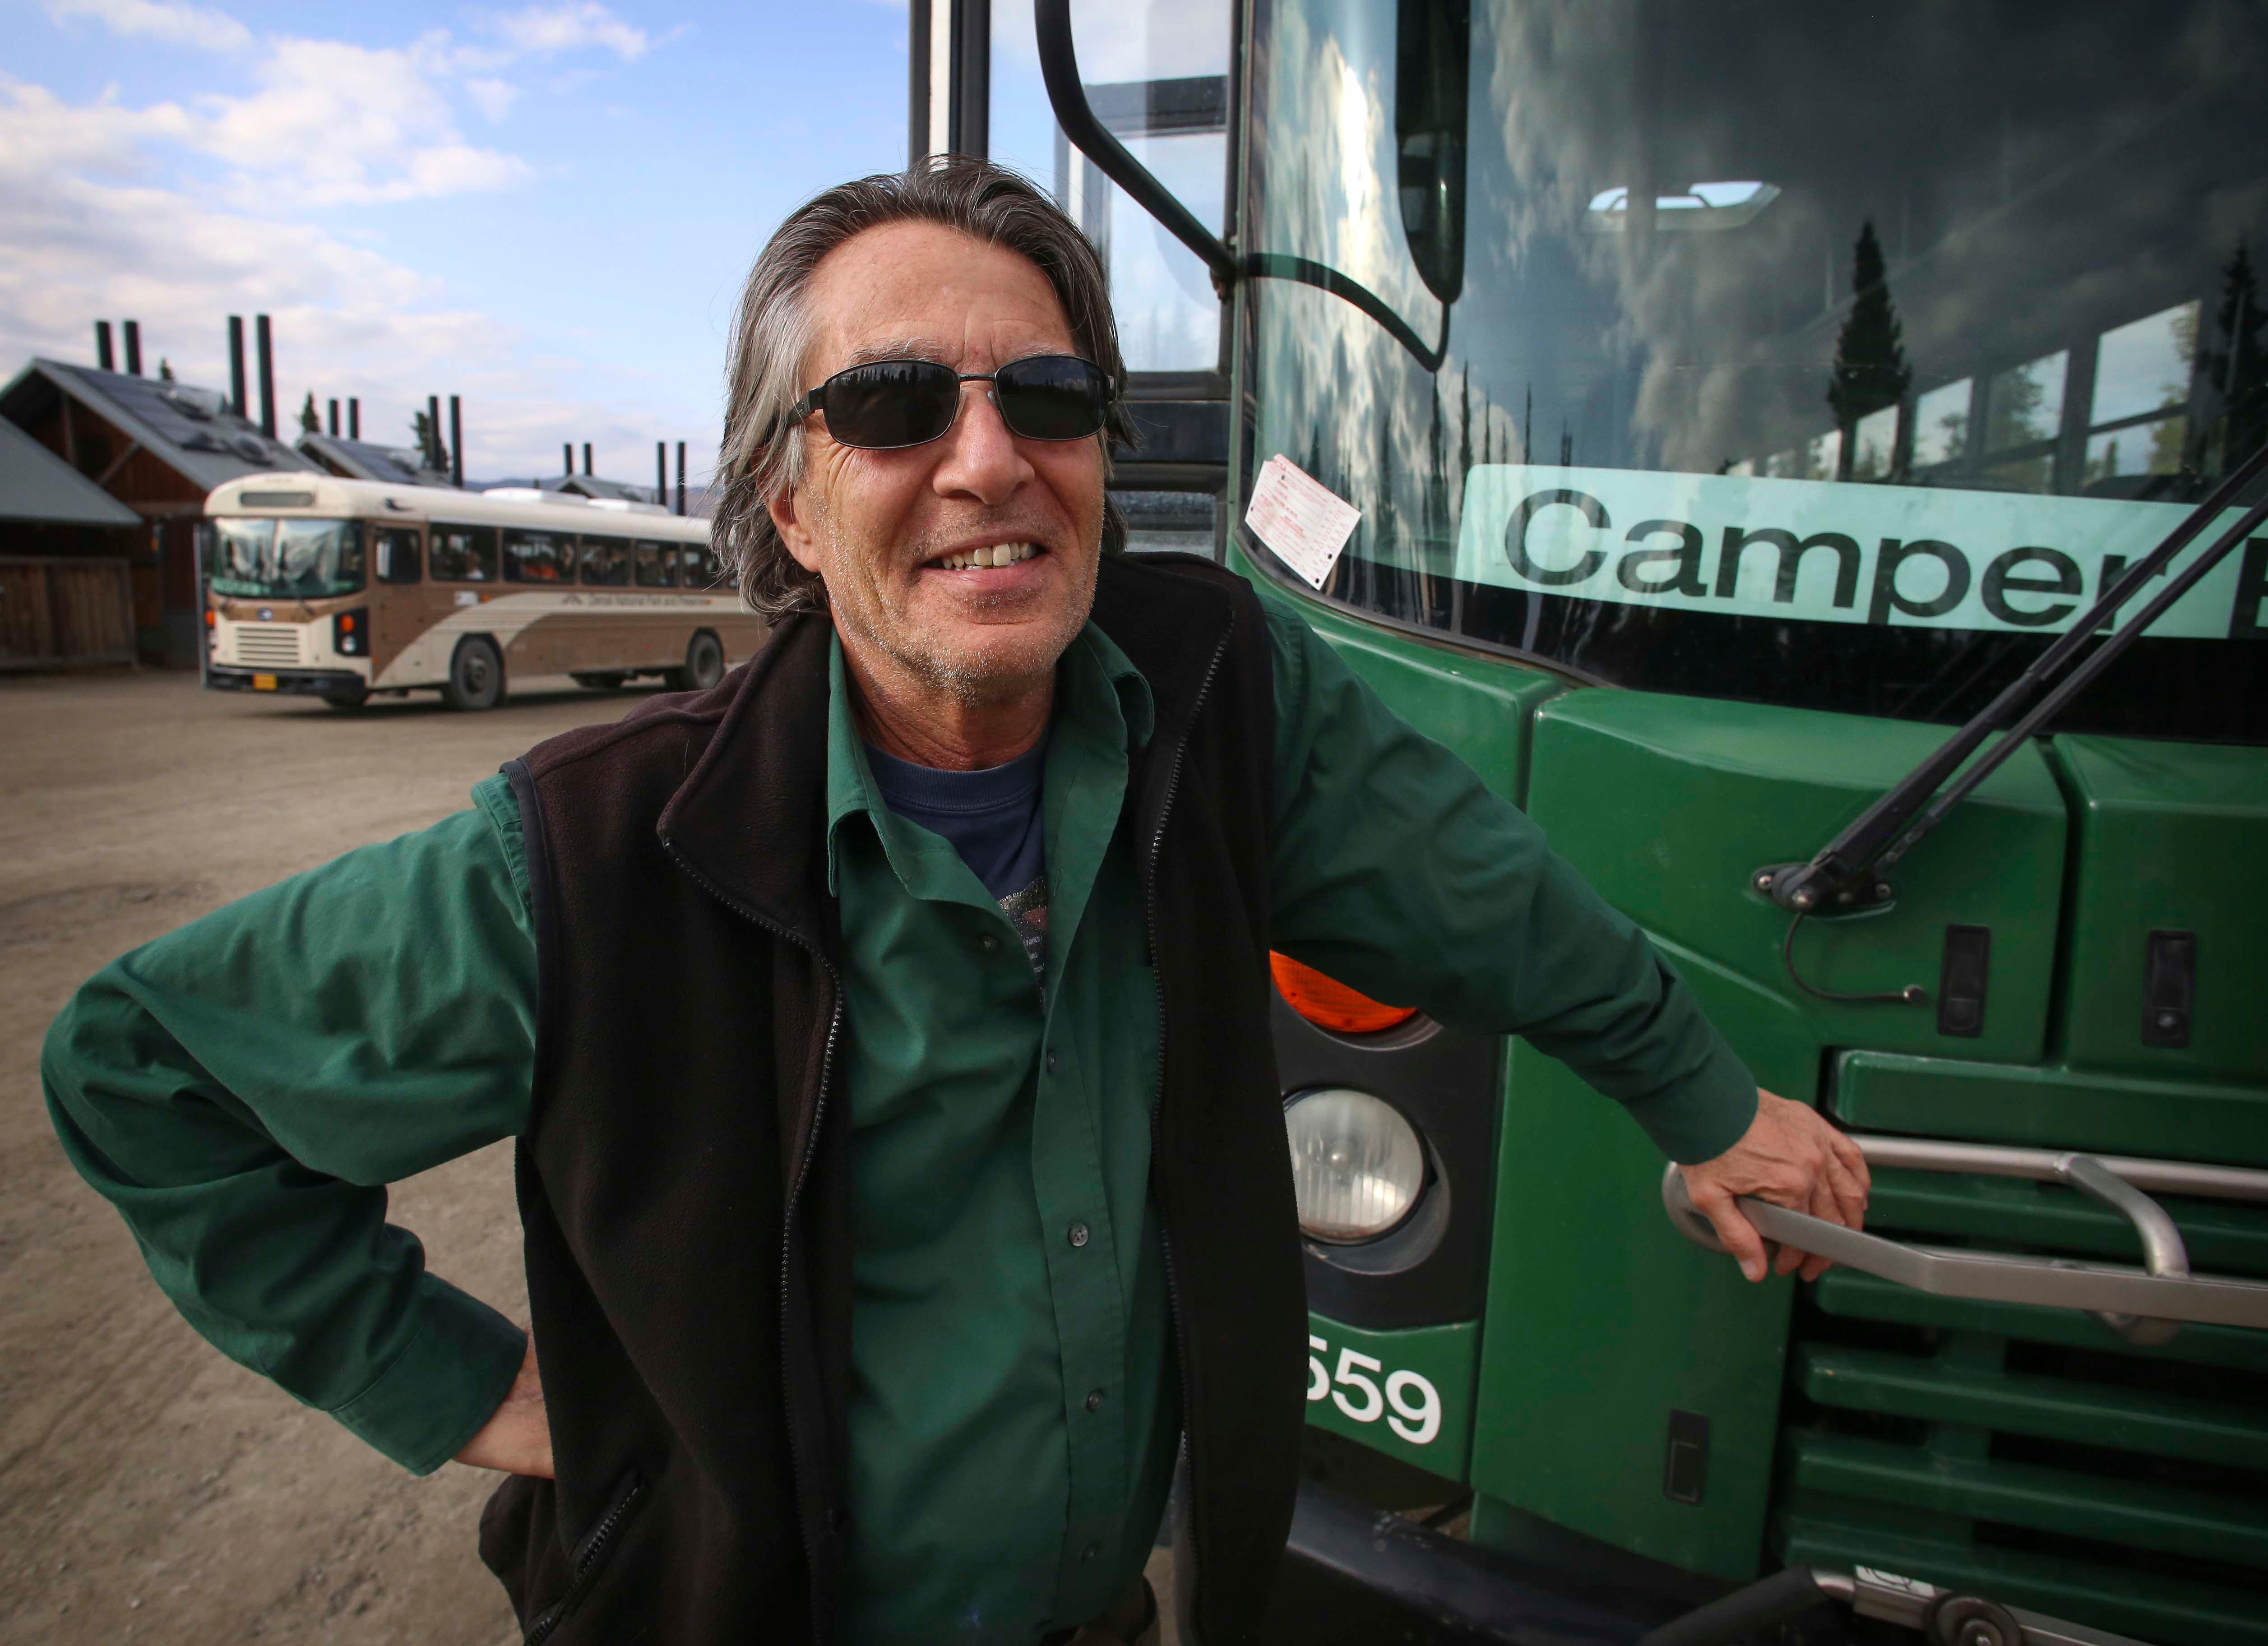 a man standing next to a green bus